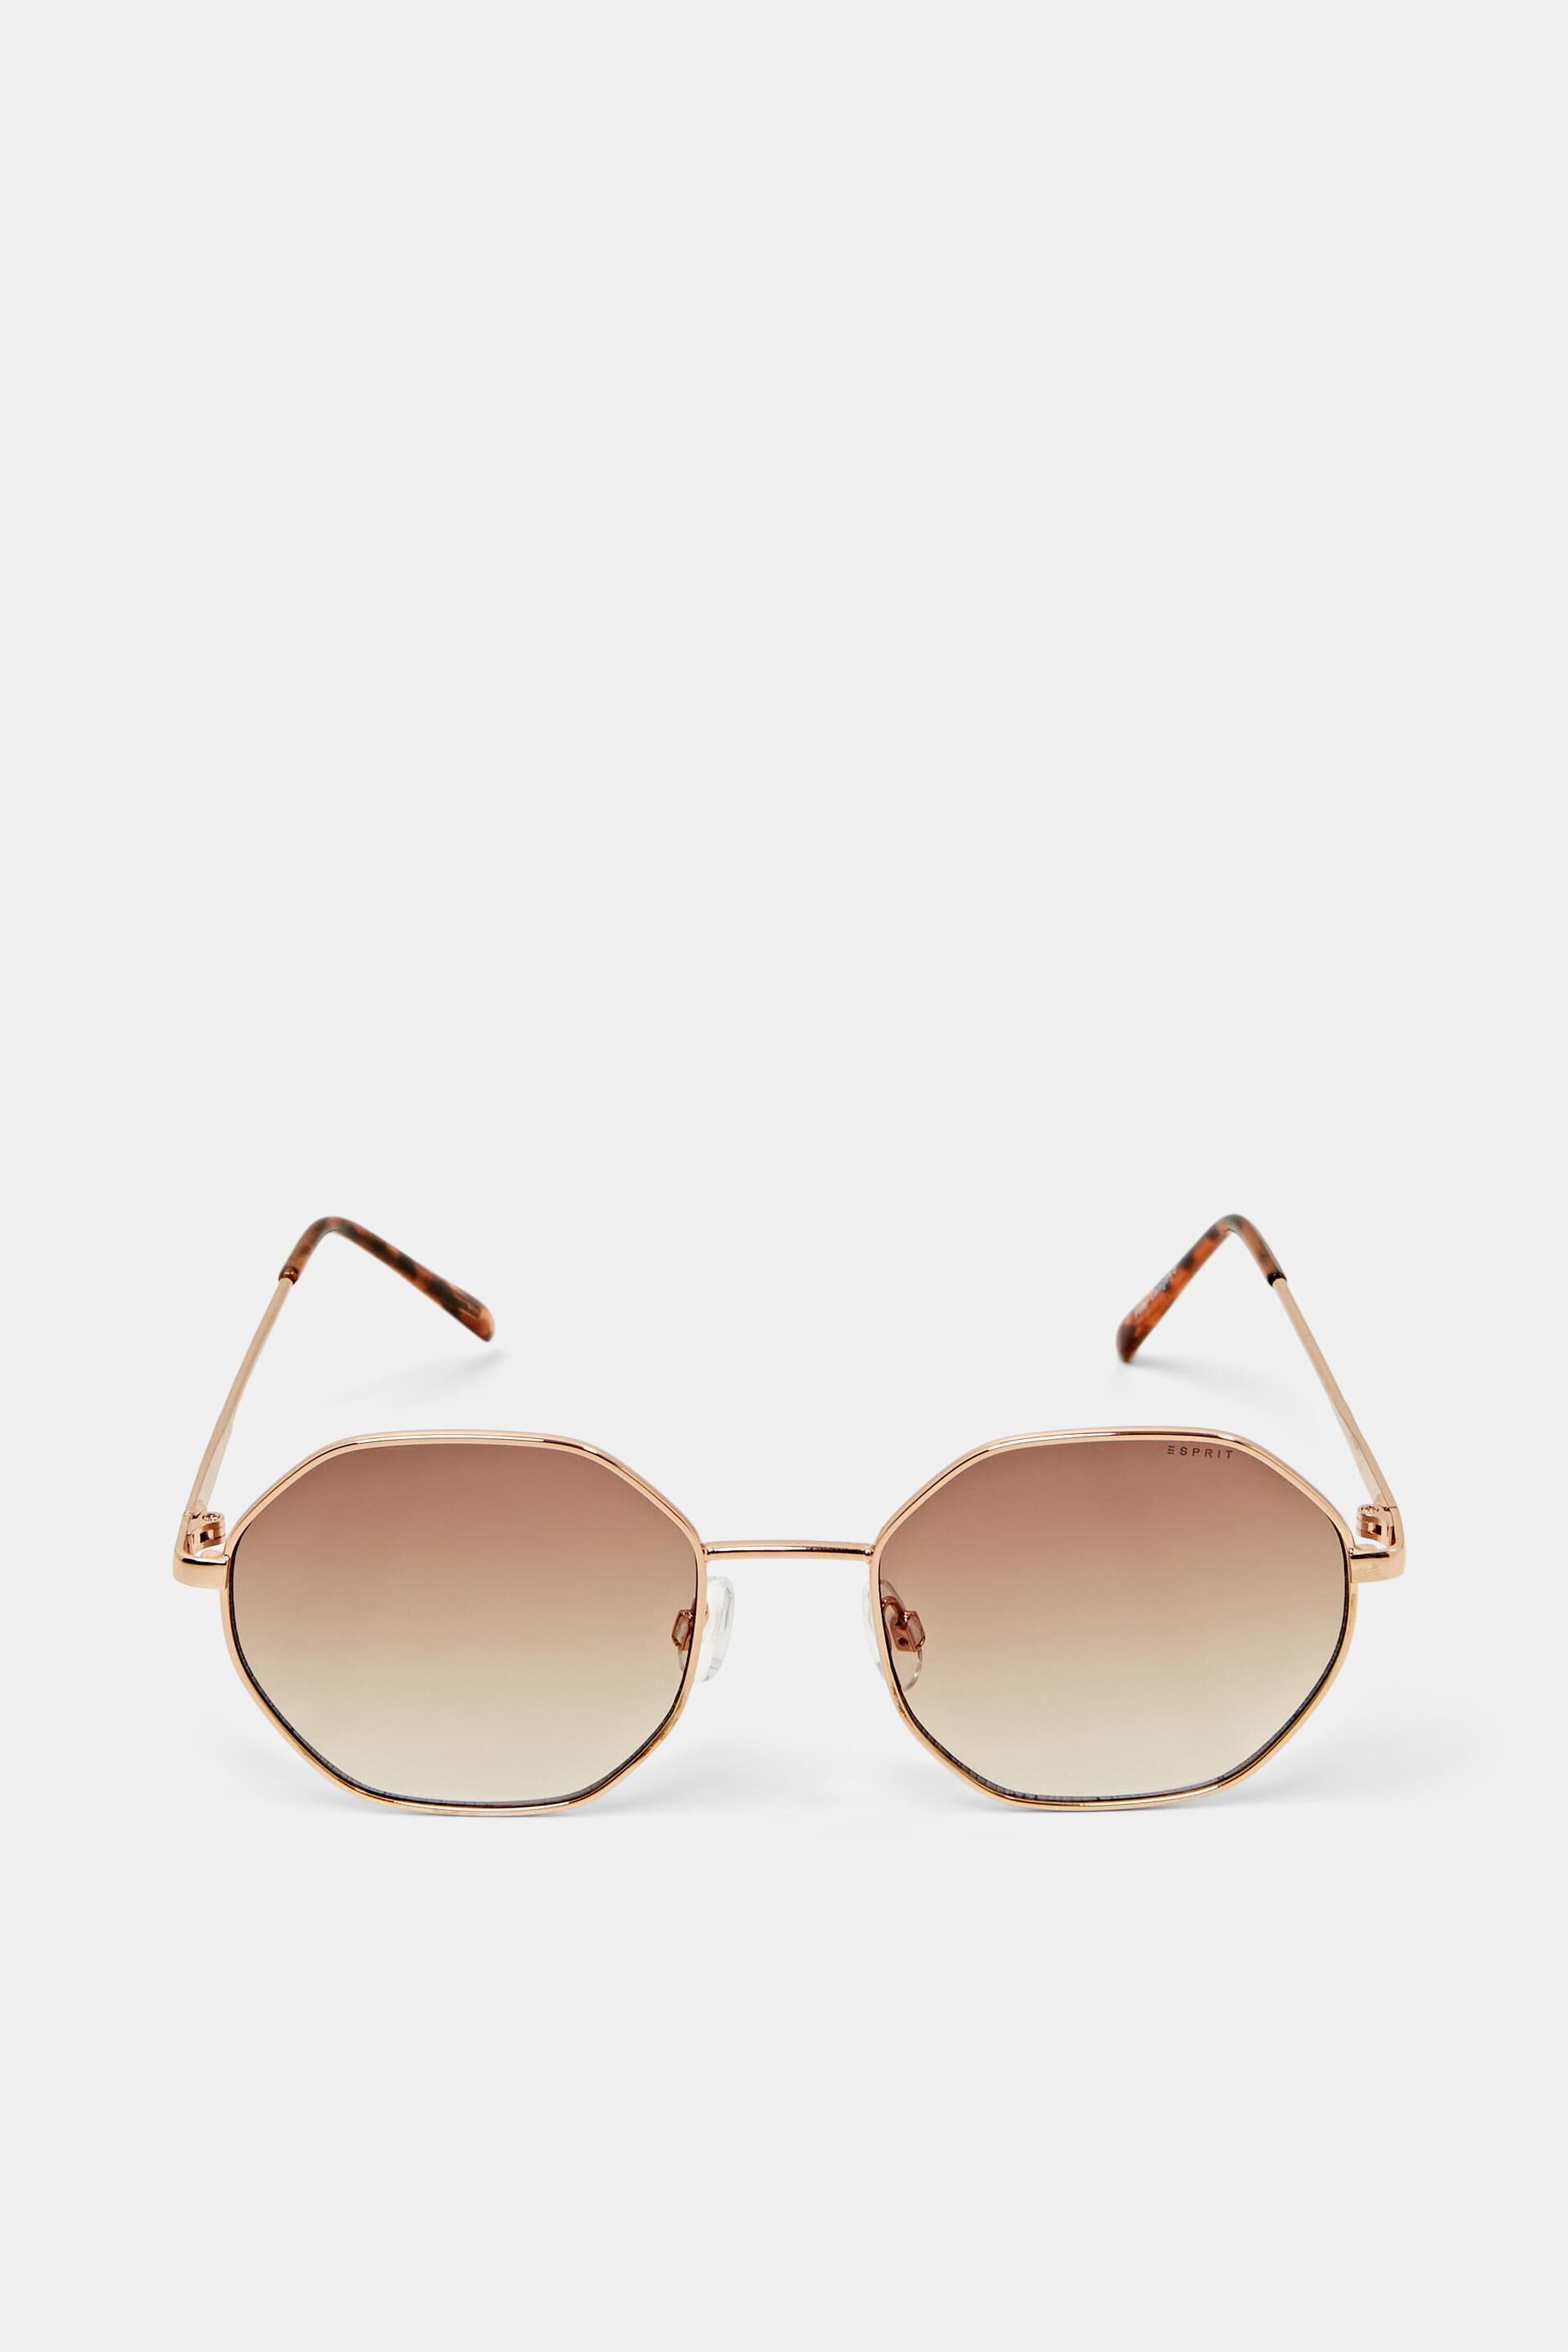 Esprit metal frame Sunglasses gold with filigree